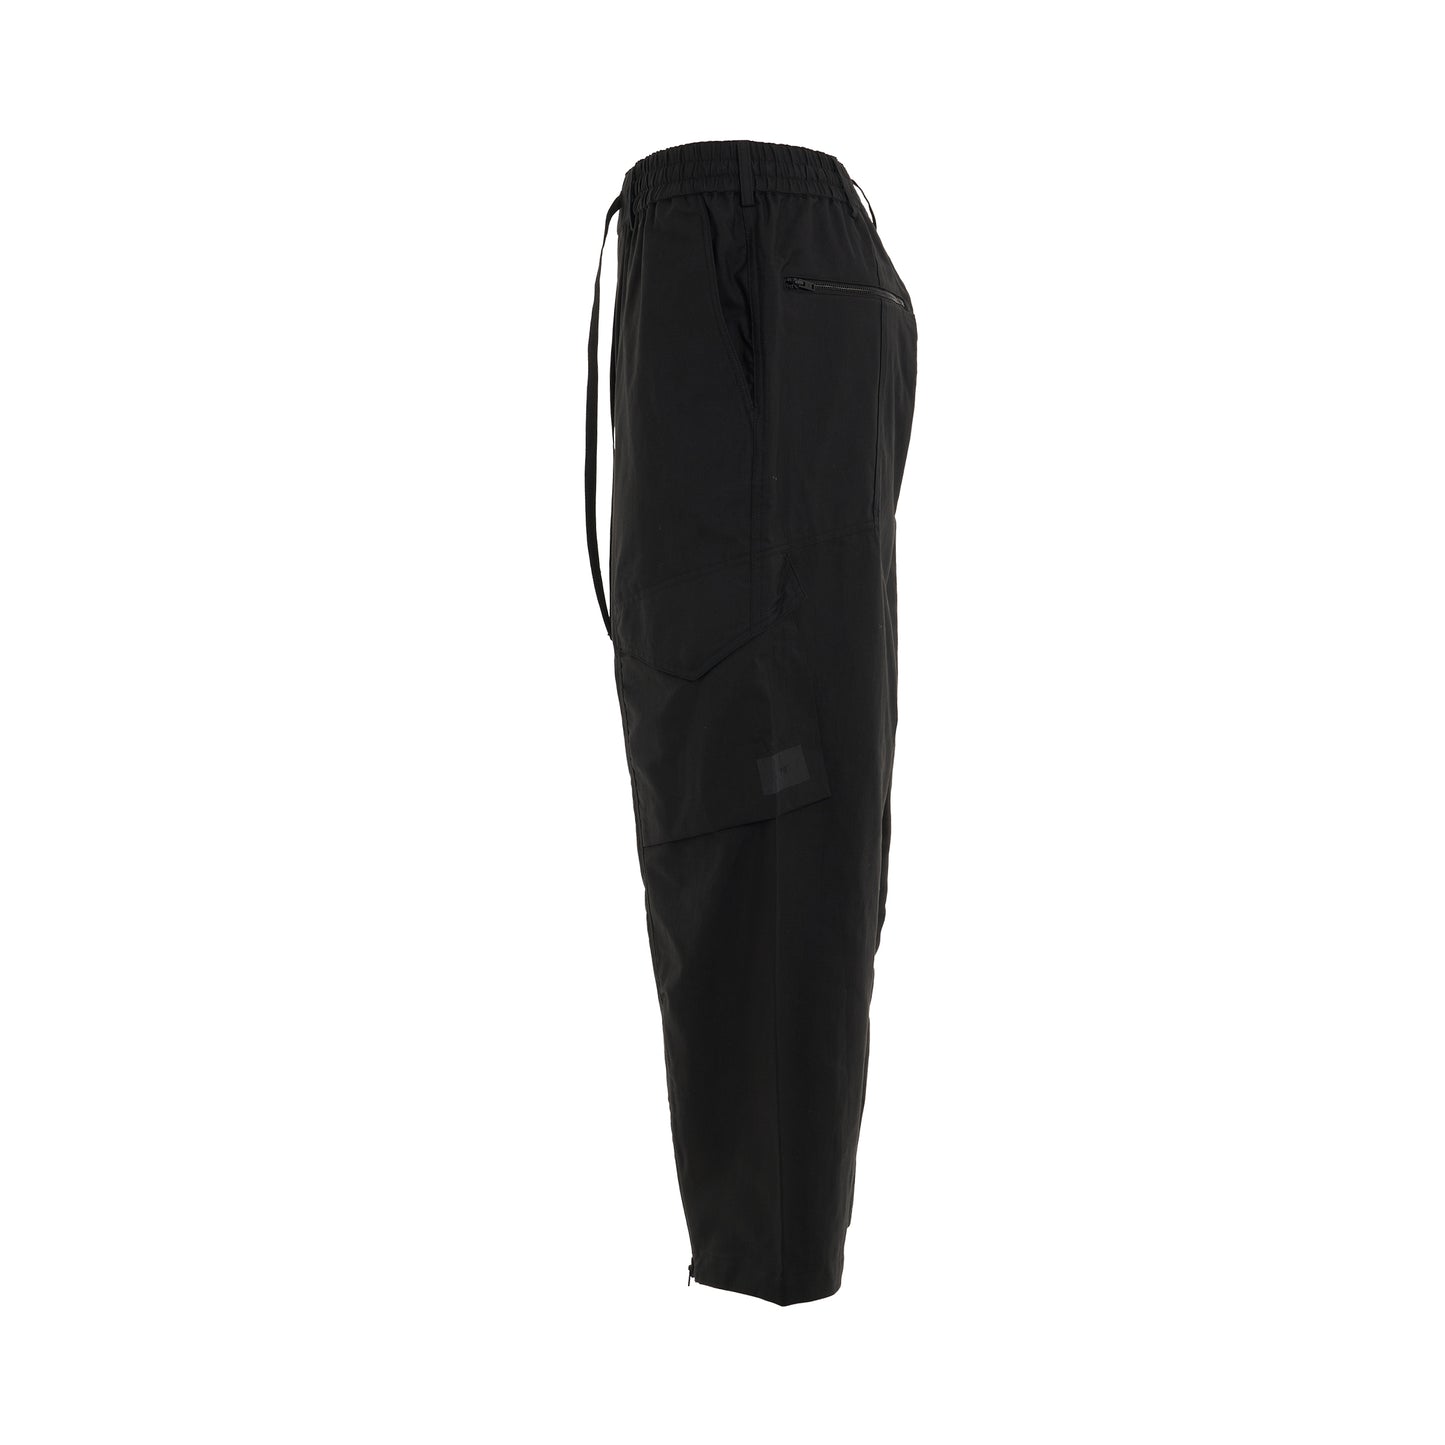 Workwear Pants in Black